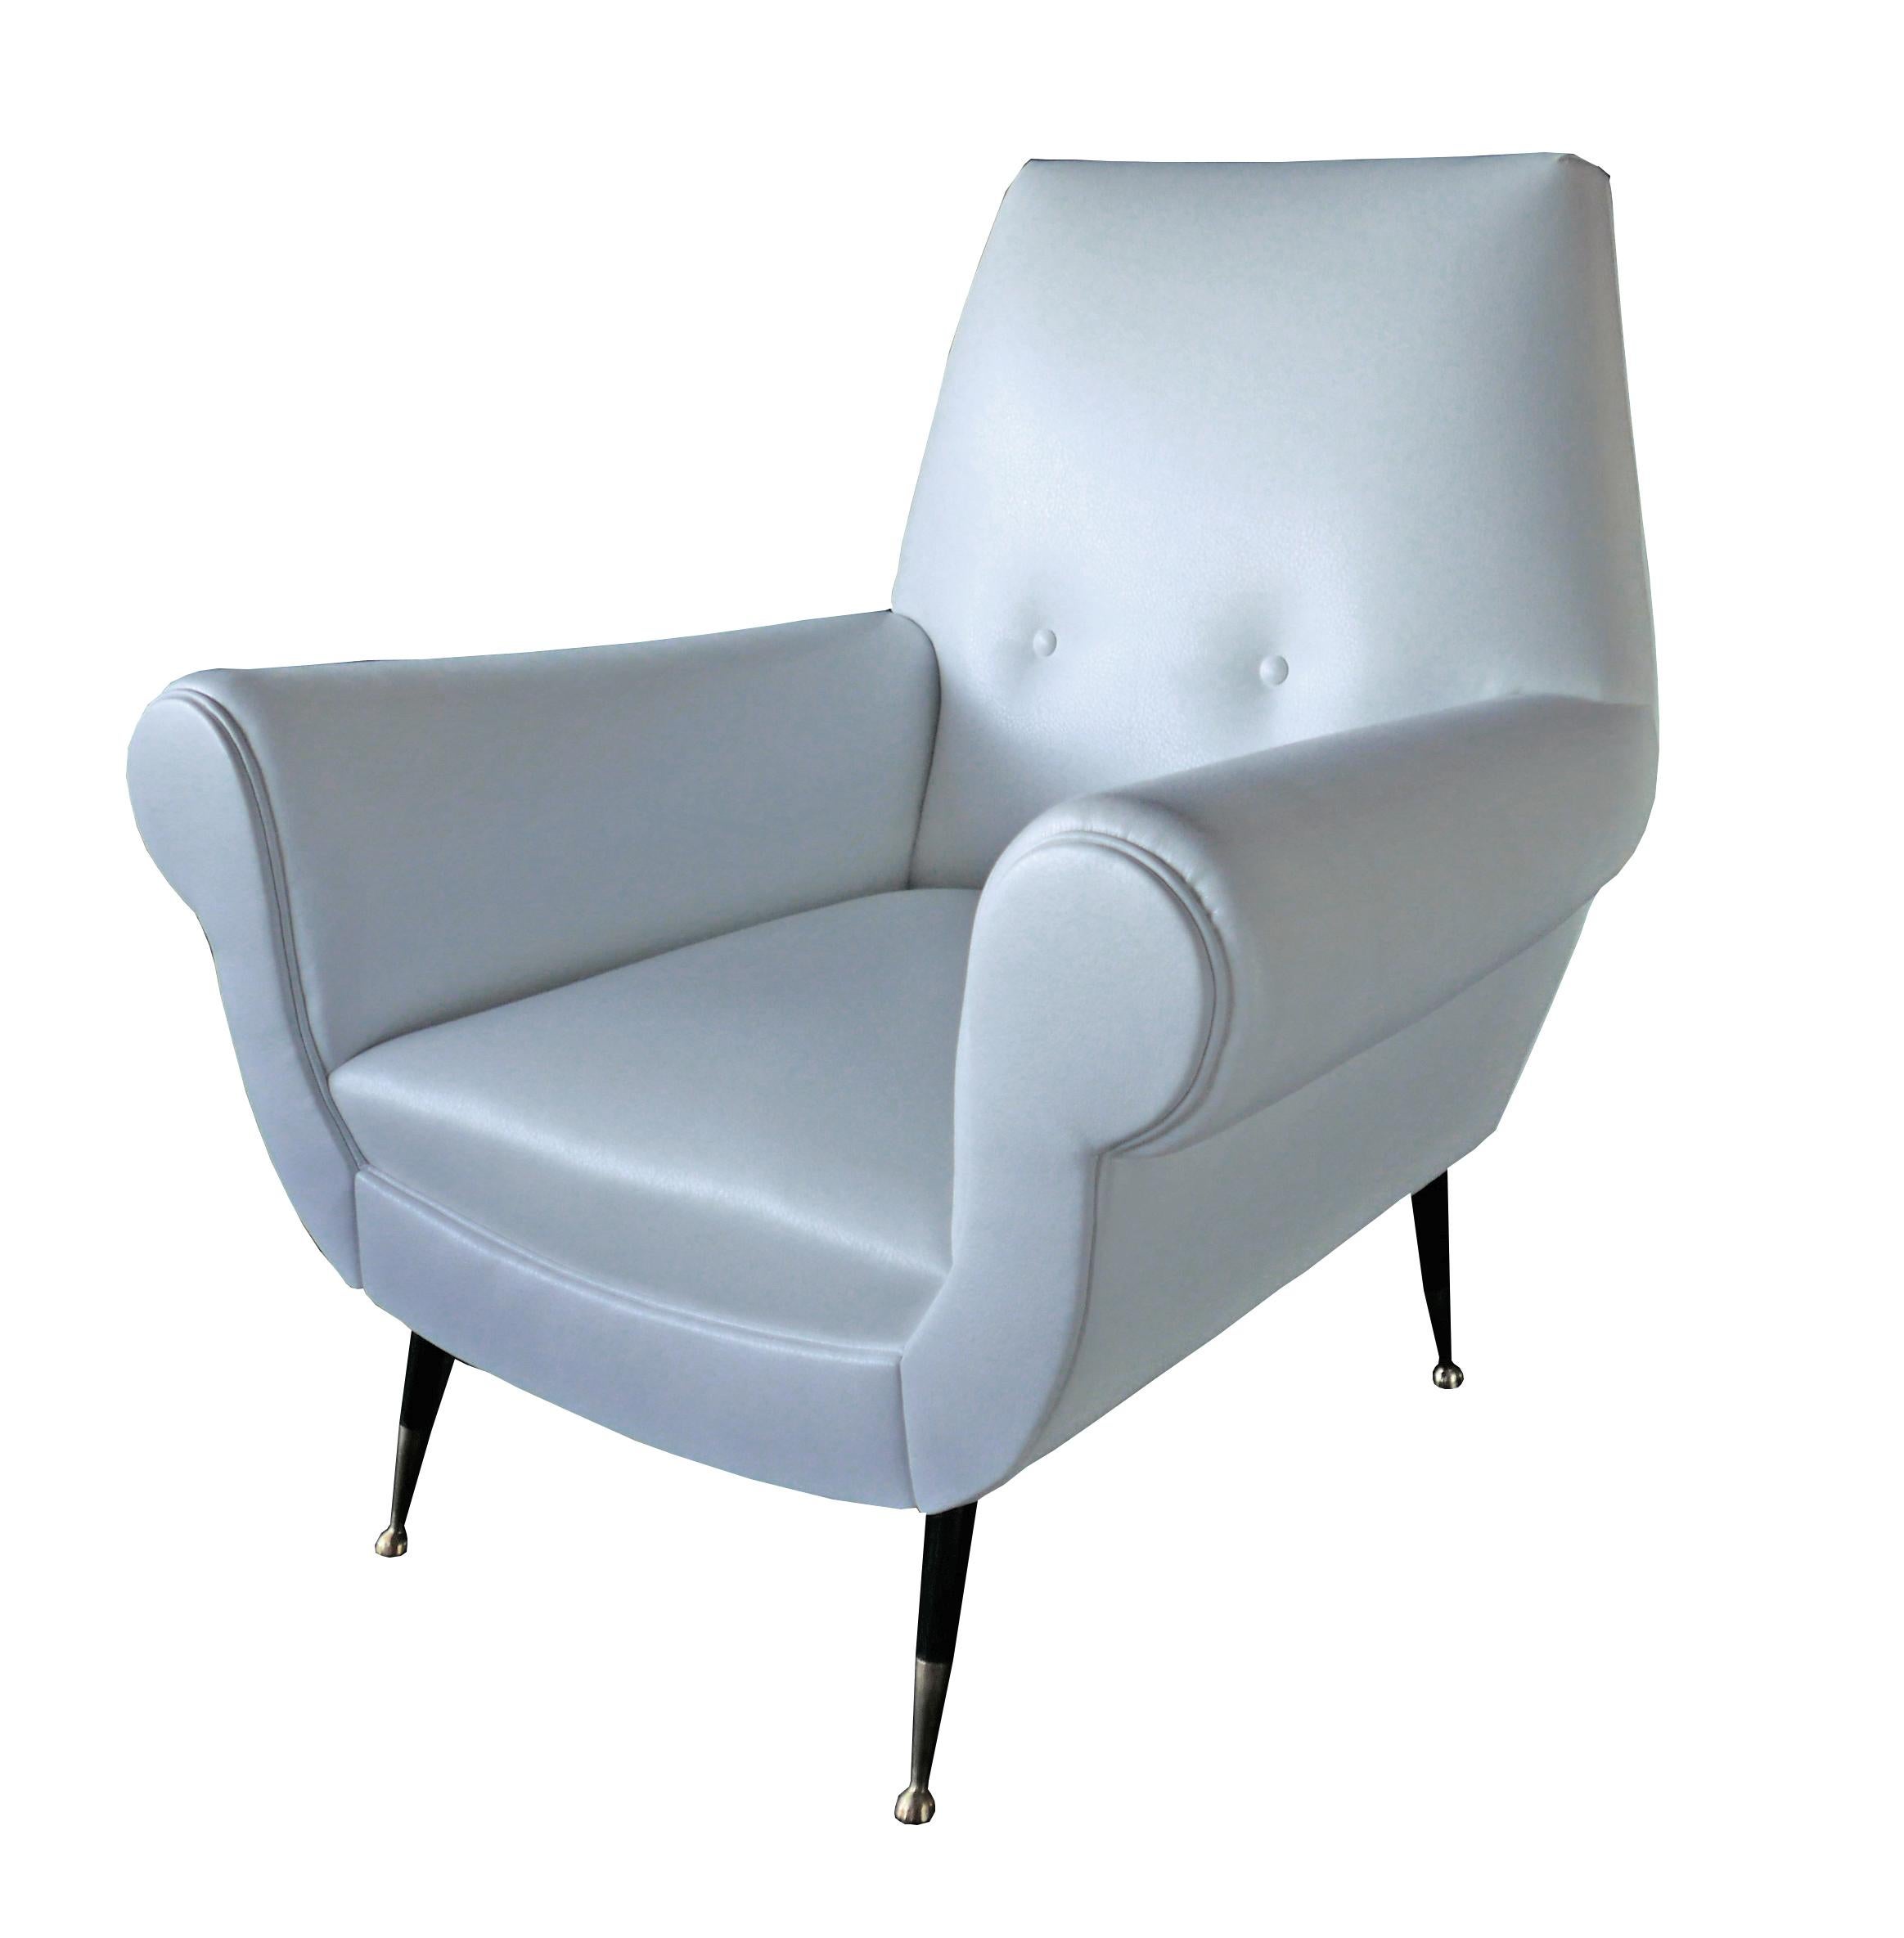 Pair of Italian Modern Leather and Brass Lounge Chairs, Gigi Radice for Minotti 1